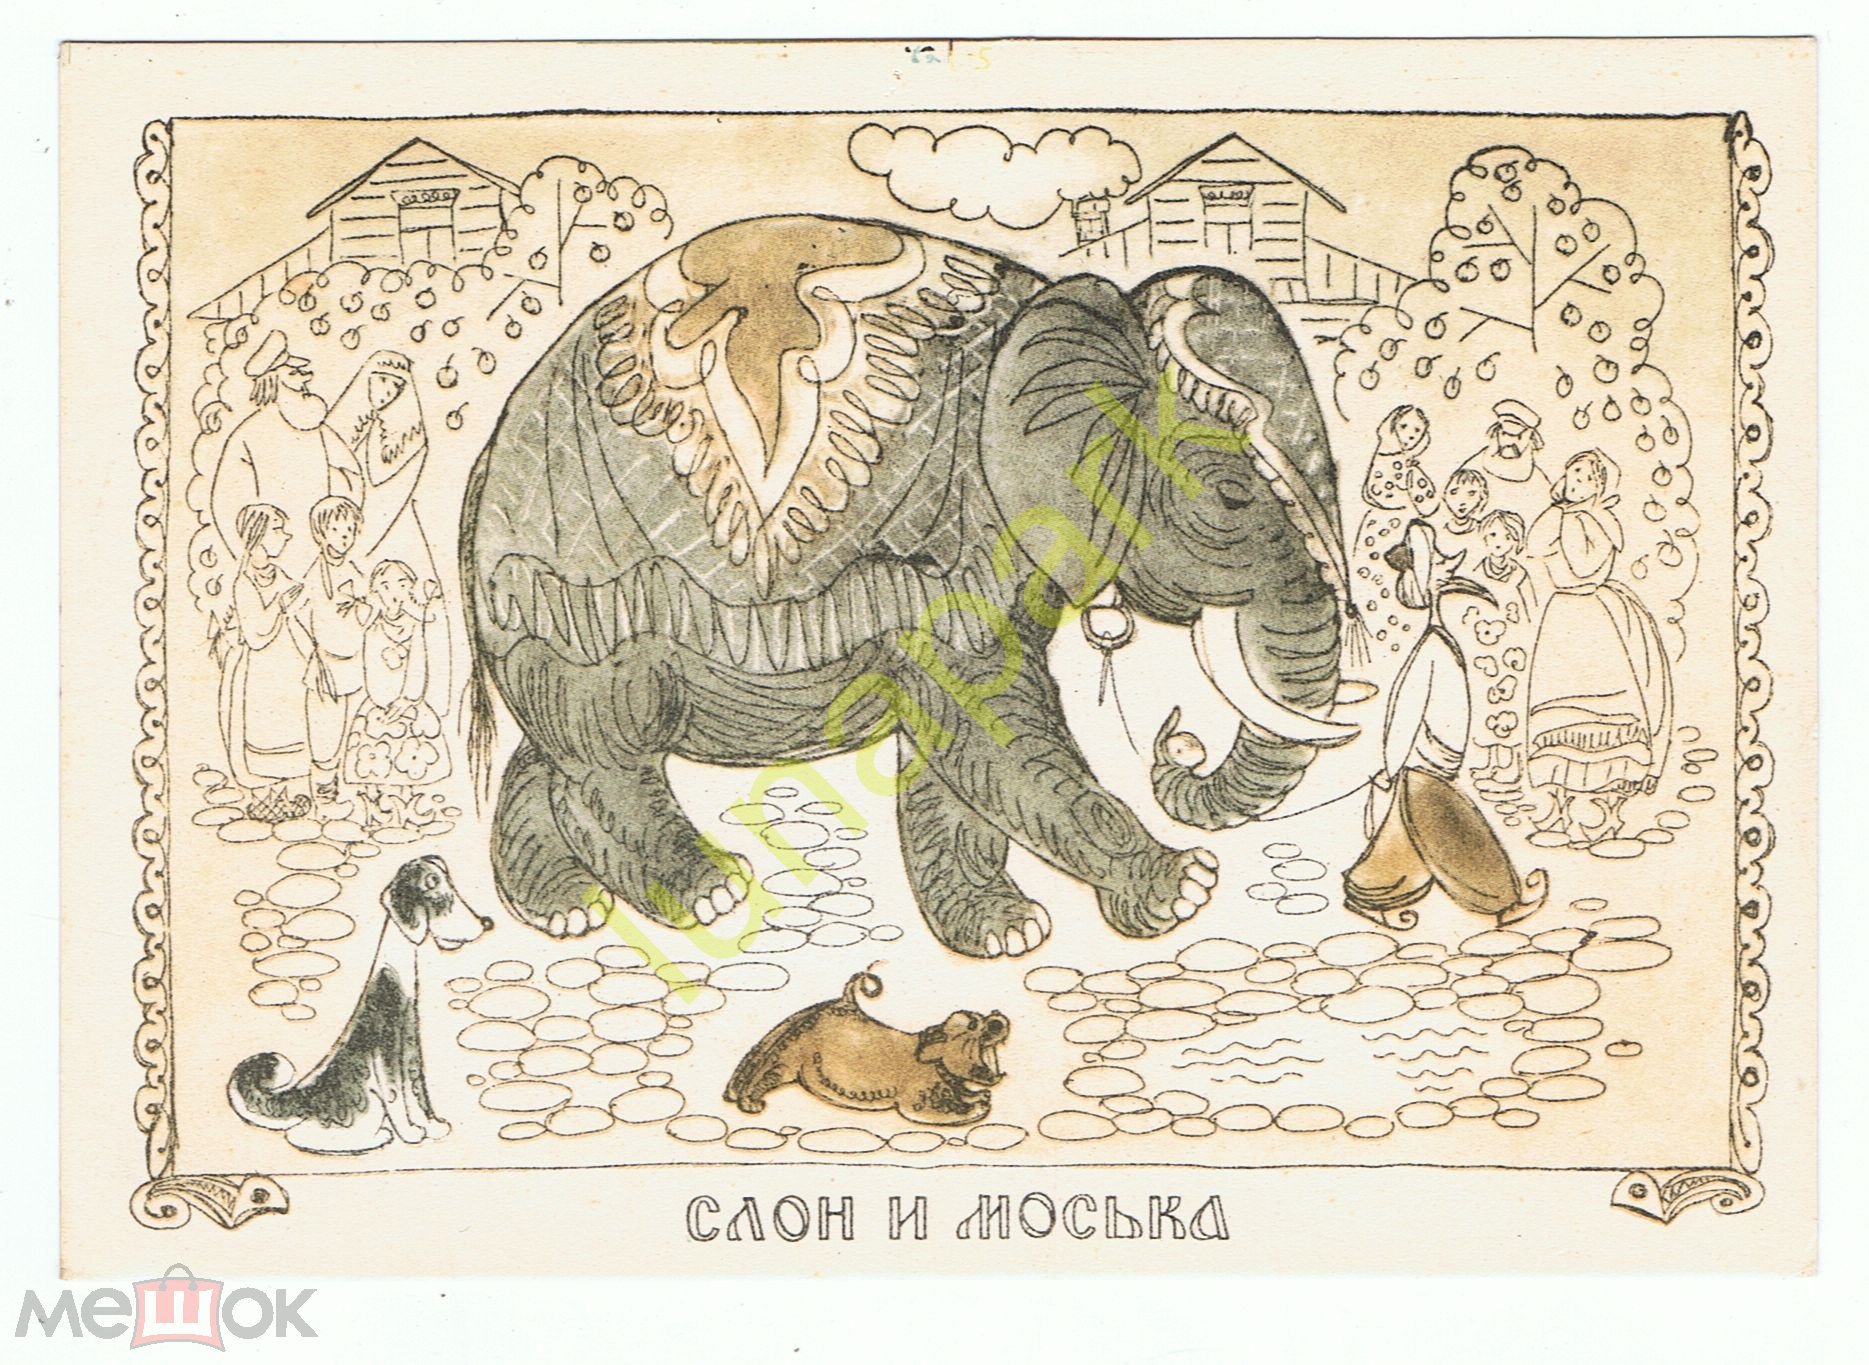 Моська из басни крылова. Басня Крылова слон и моська. Иллюстрация к басне слон и моська. Иллюстрация к басне Крылова слон и моська. И.А. Крылов слон и моська.